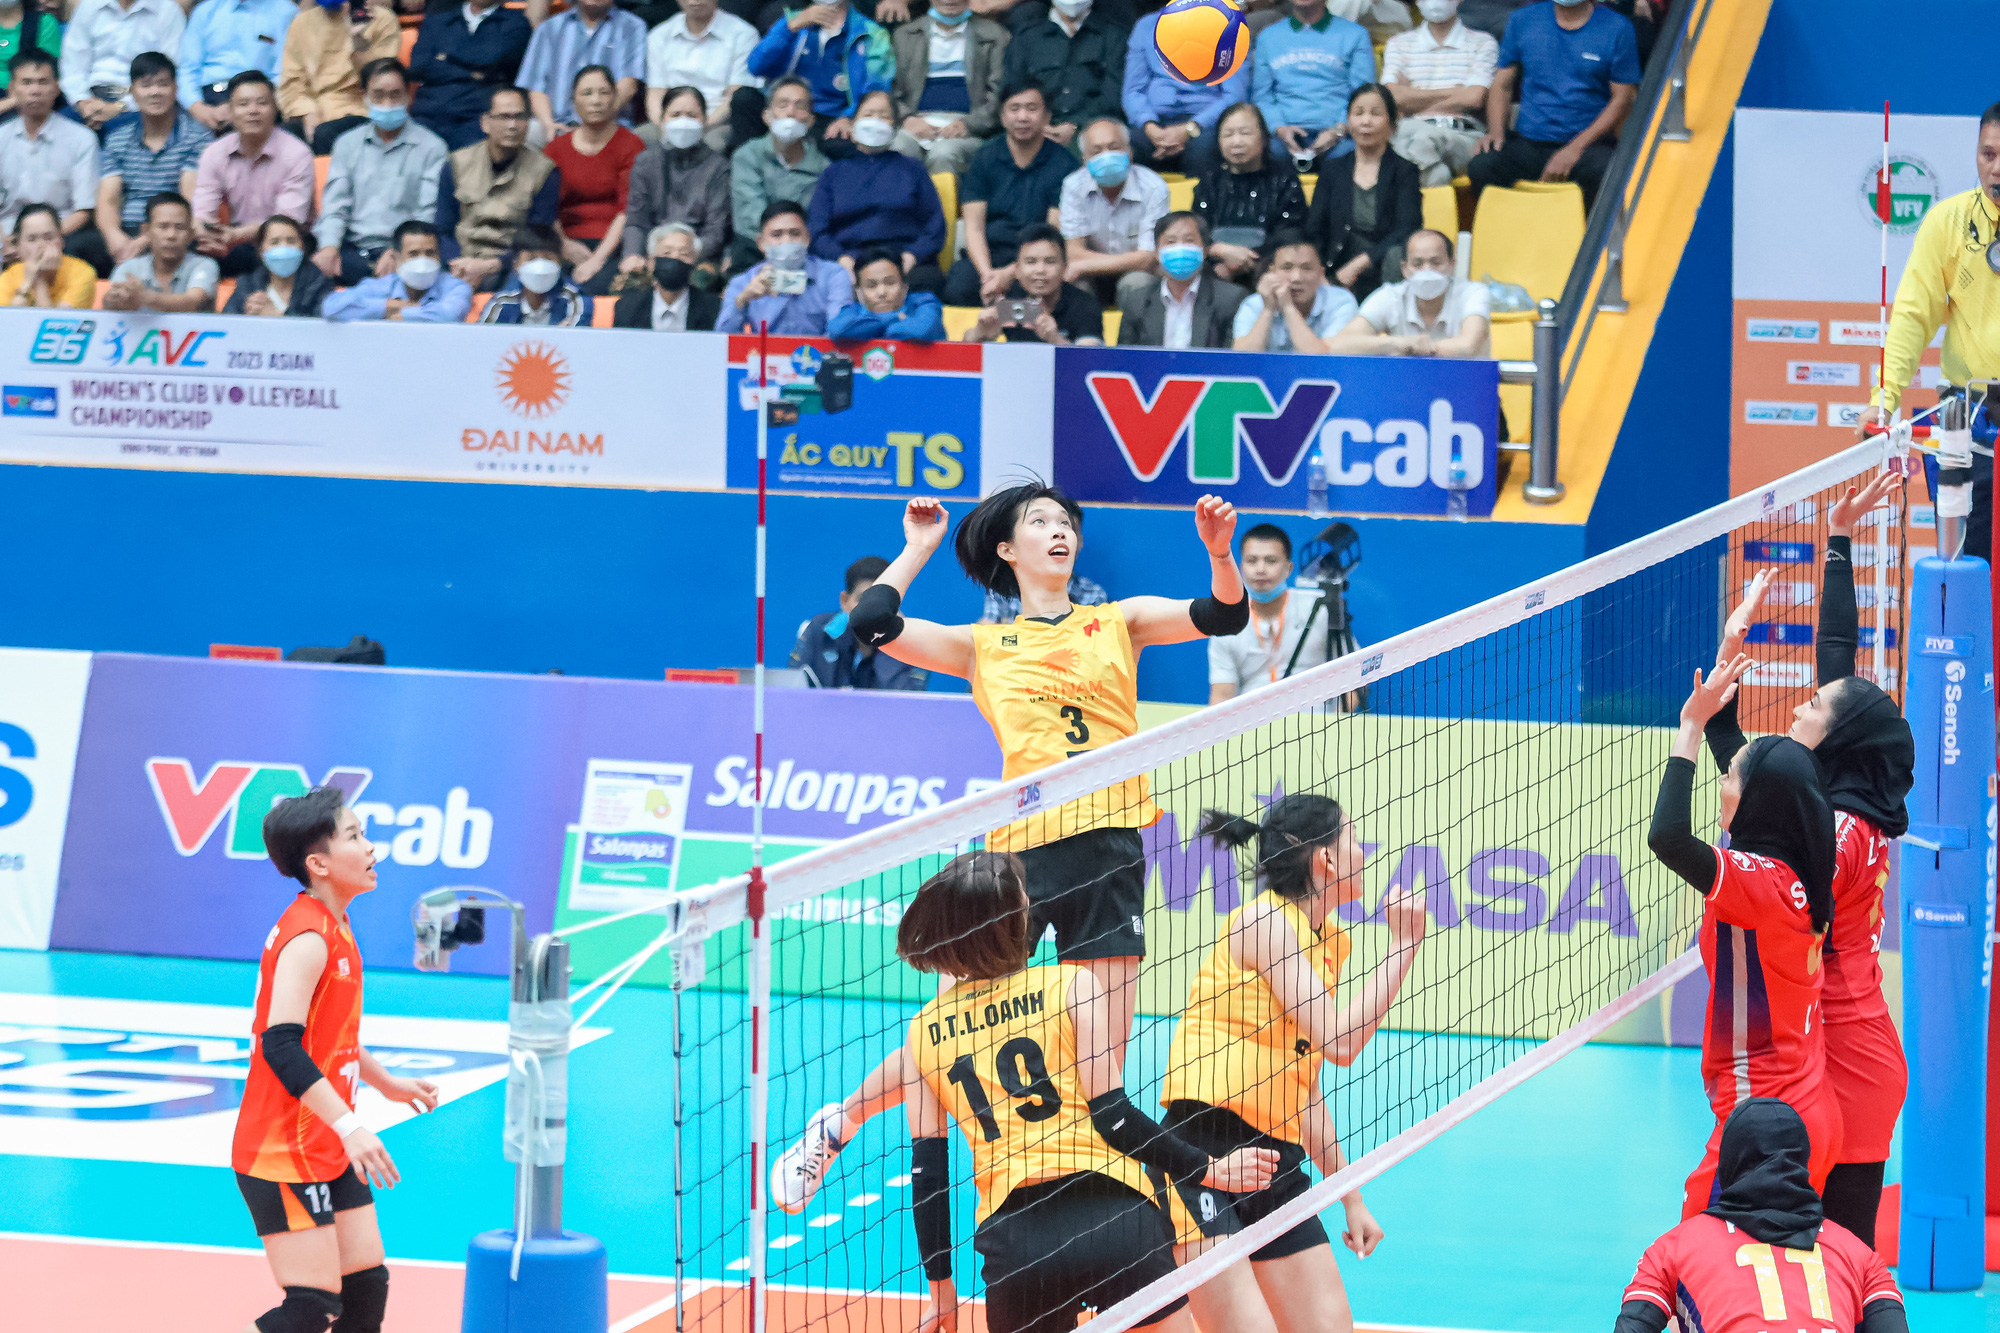 Vietnam kicks off 2023 Asian Women’s Club Volleyball Championship with